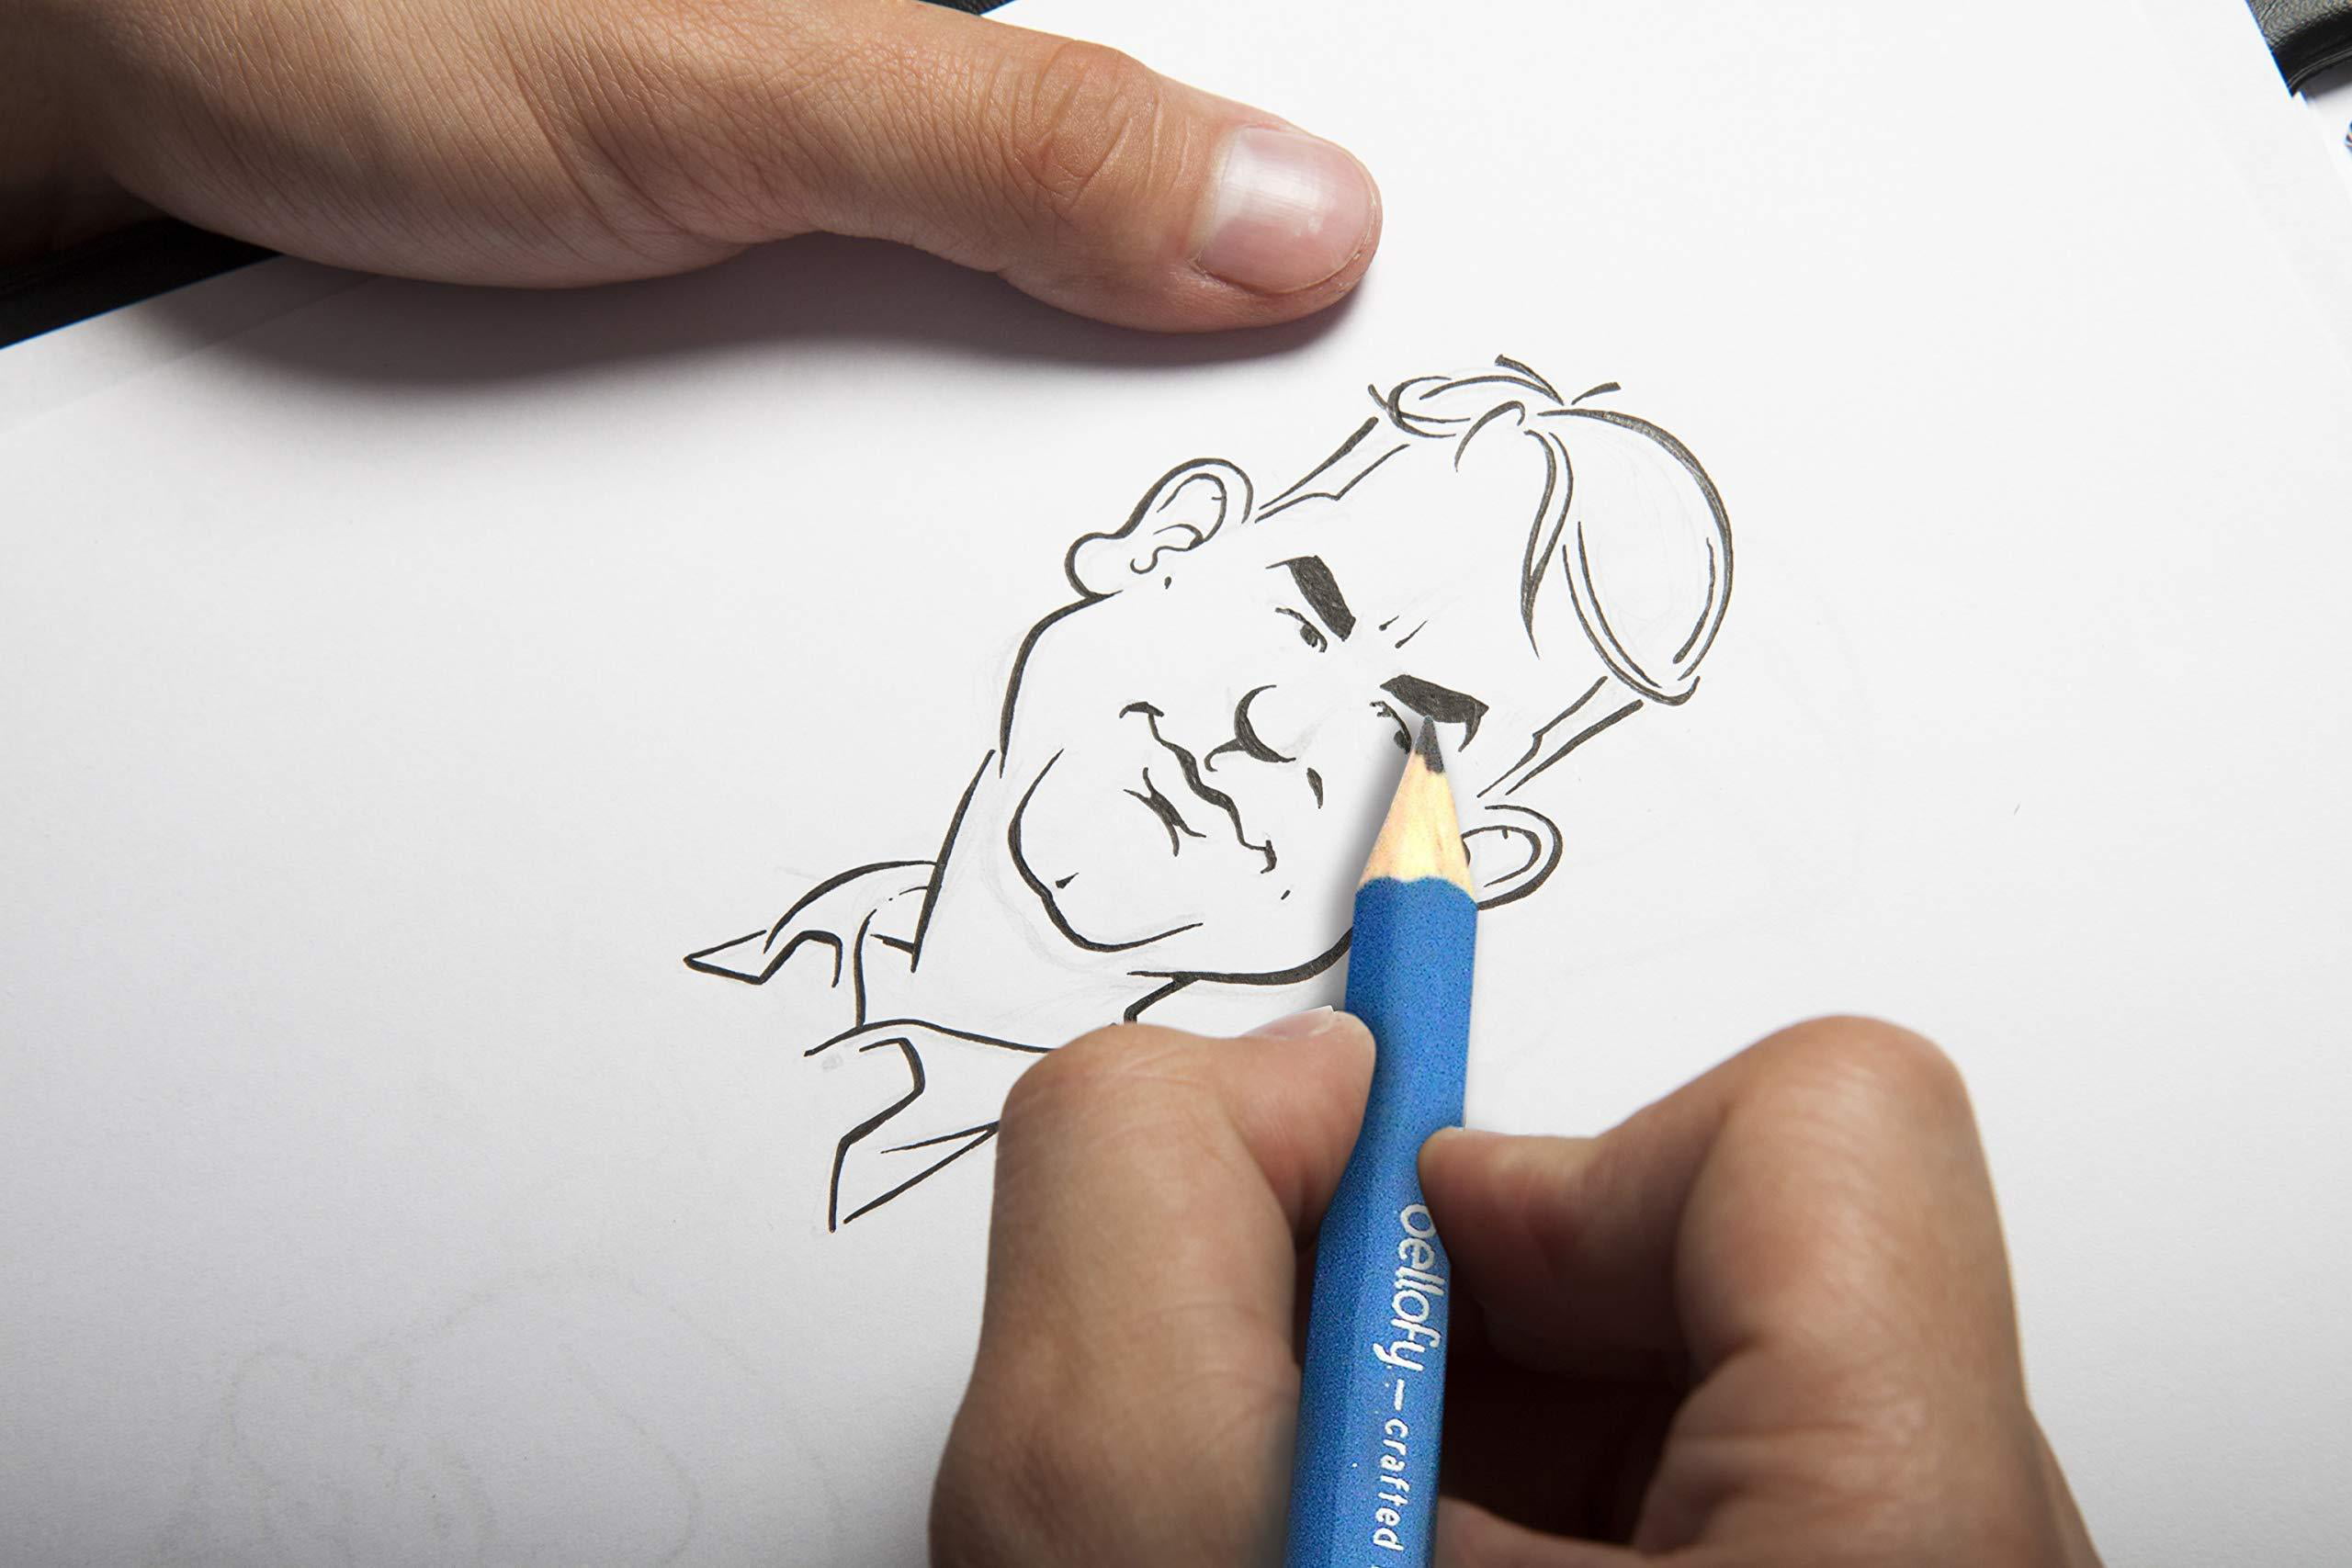 Bellofy Drawing Kit for Adults & Kids Shading & Drawing Pencils